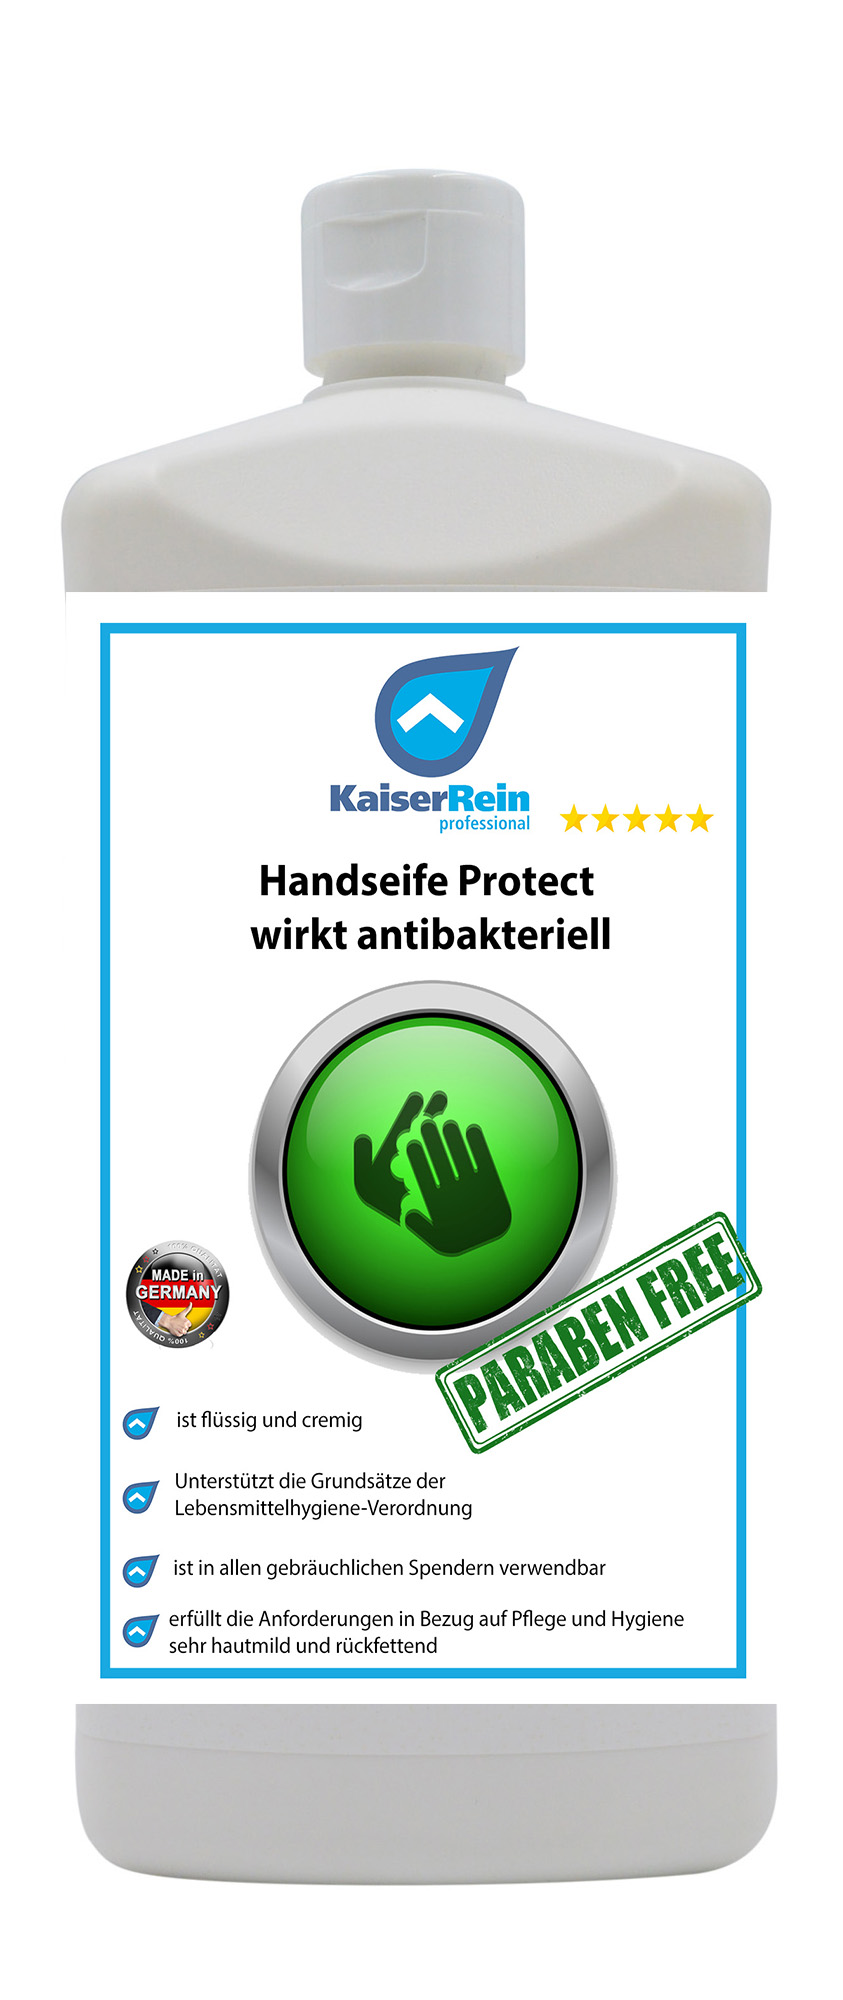 Handseife Protect 1 L wirkt antibakteriell Hygienische hautschonende Handseife